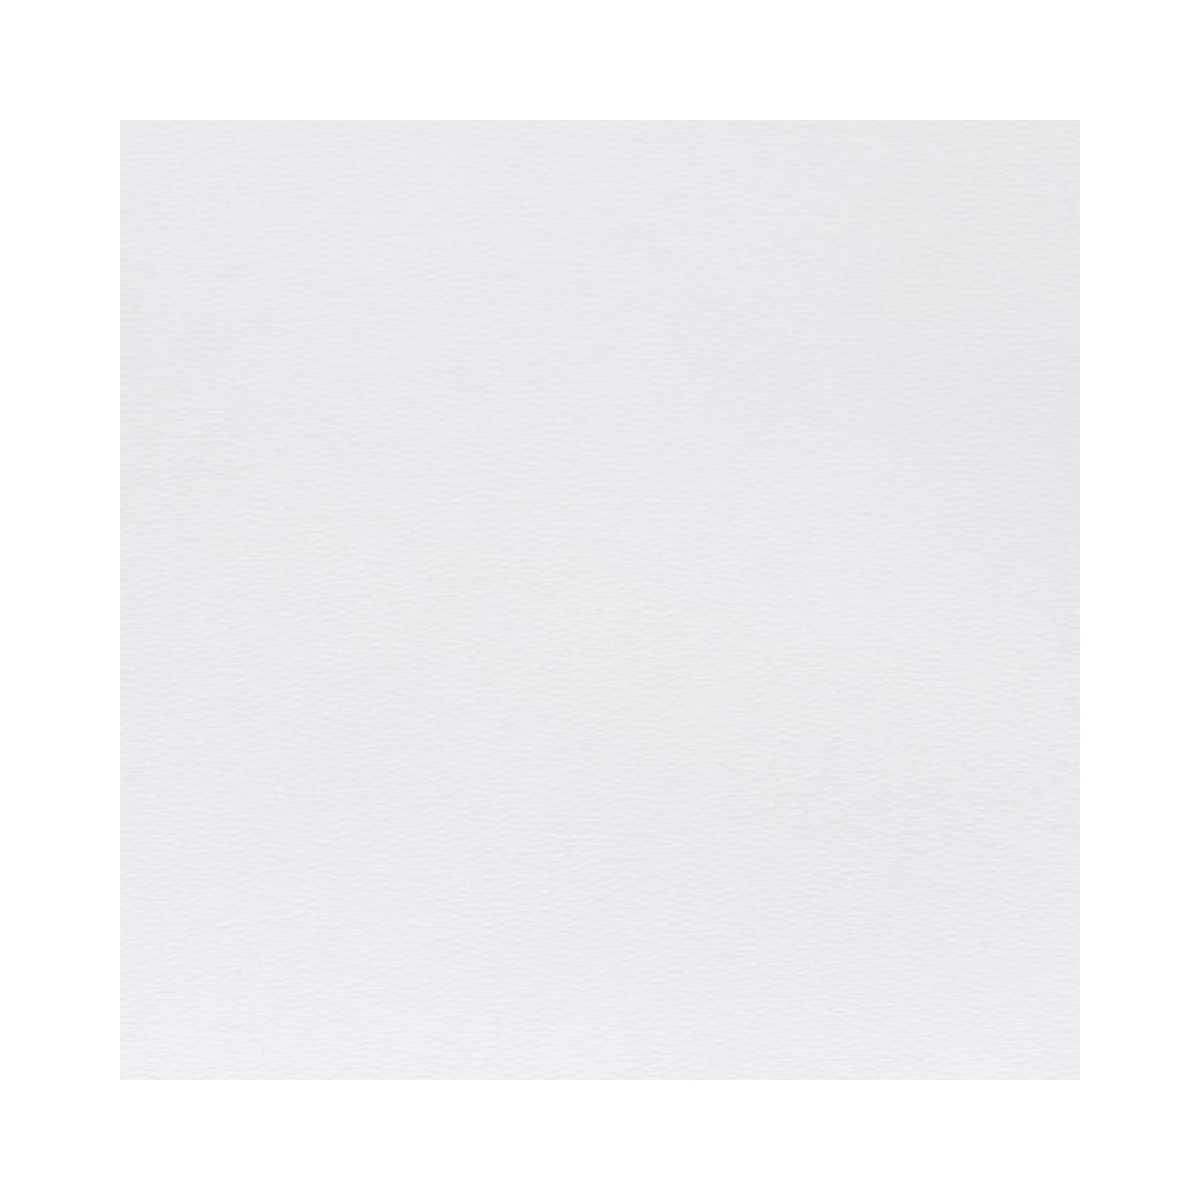 SPEEDBALL Single Sheet Paper Bienfang - Aquademic Watercolour Paper - 18x24" - 140lb